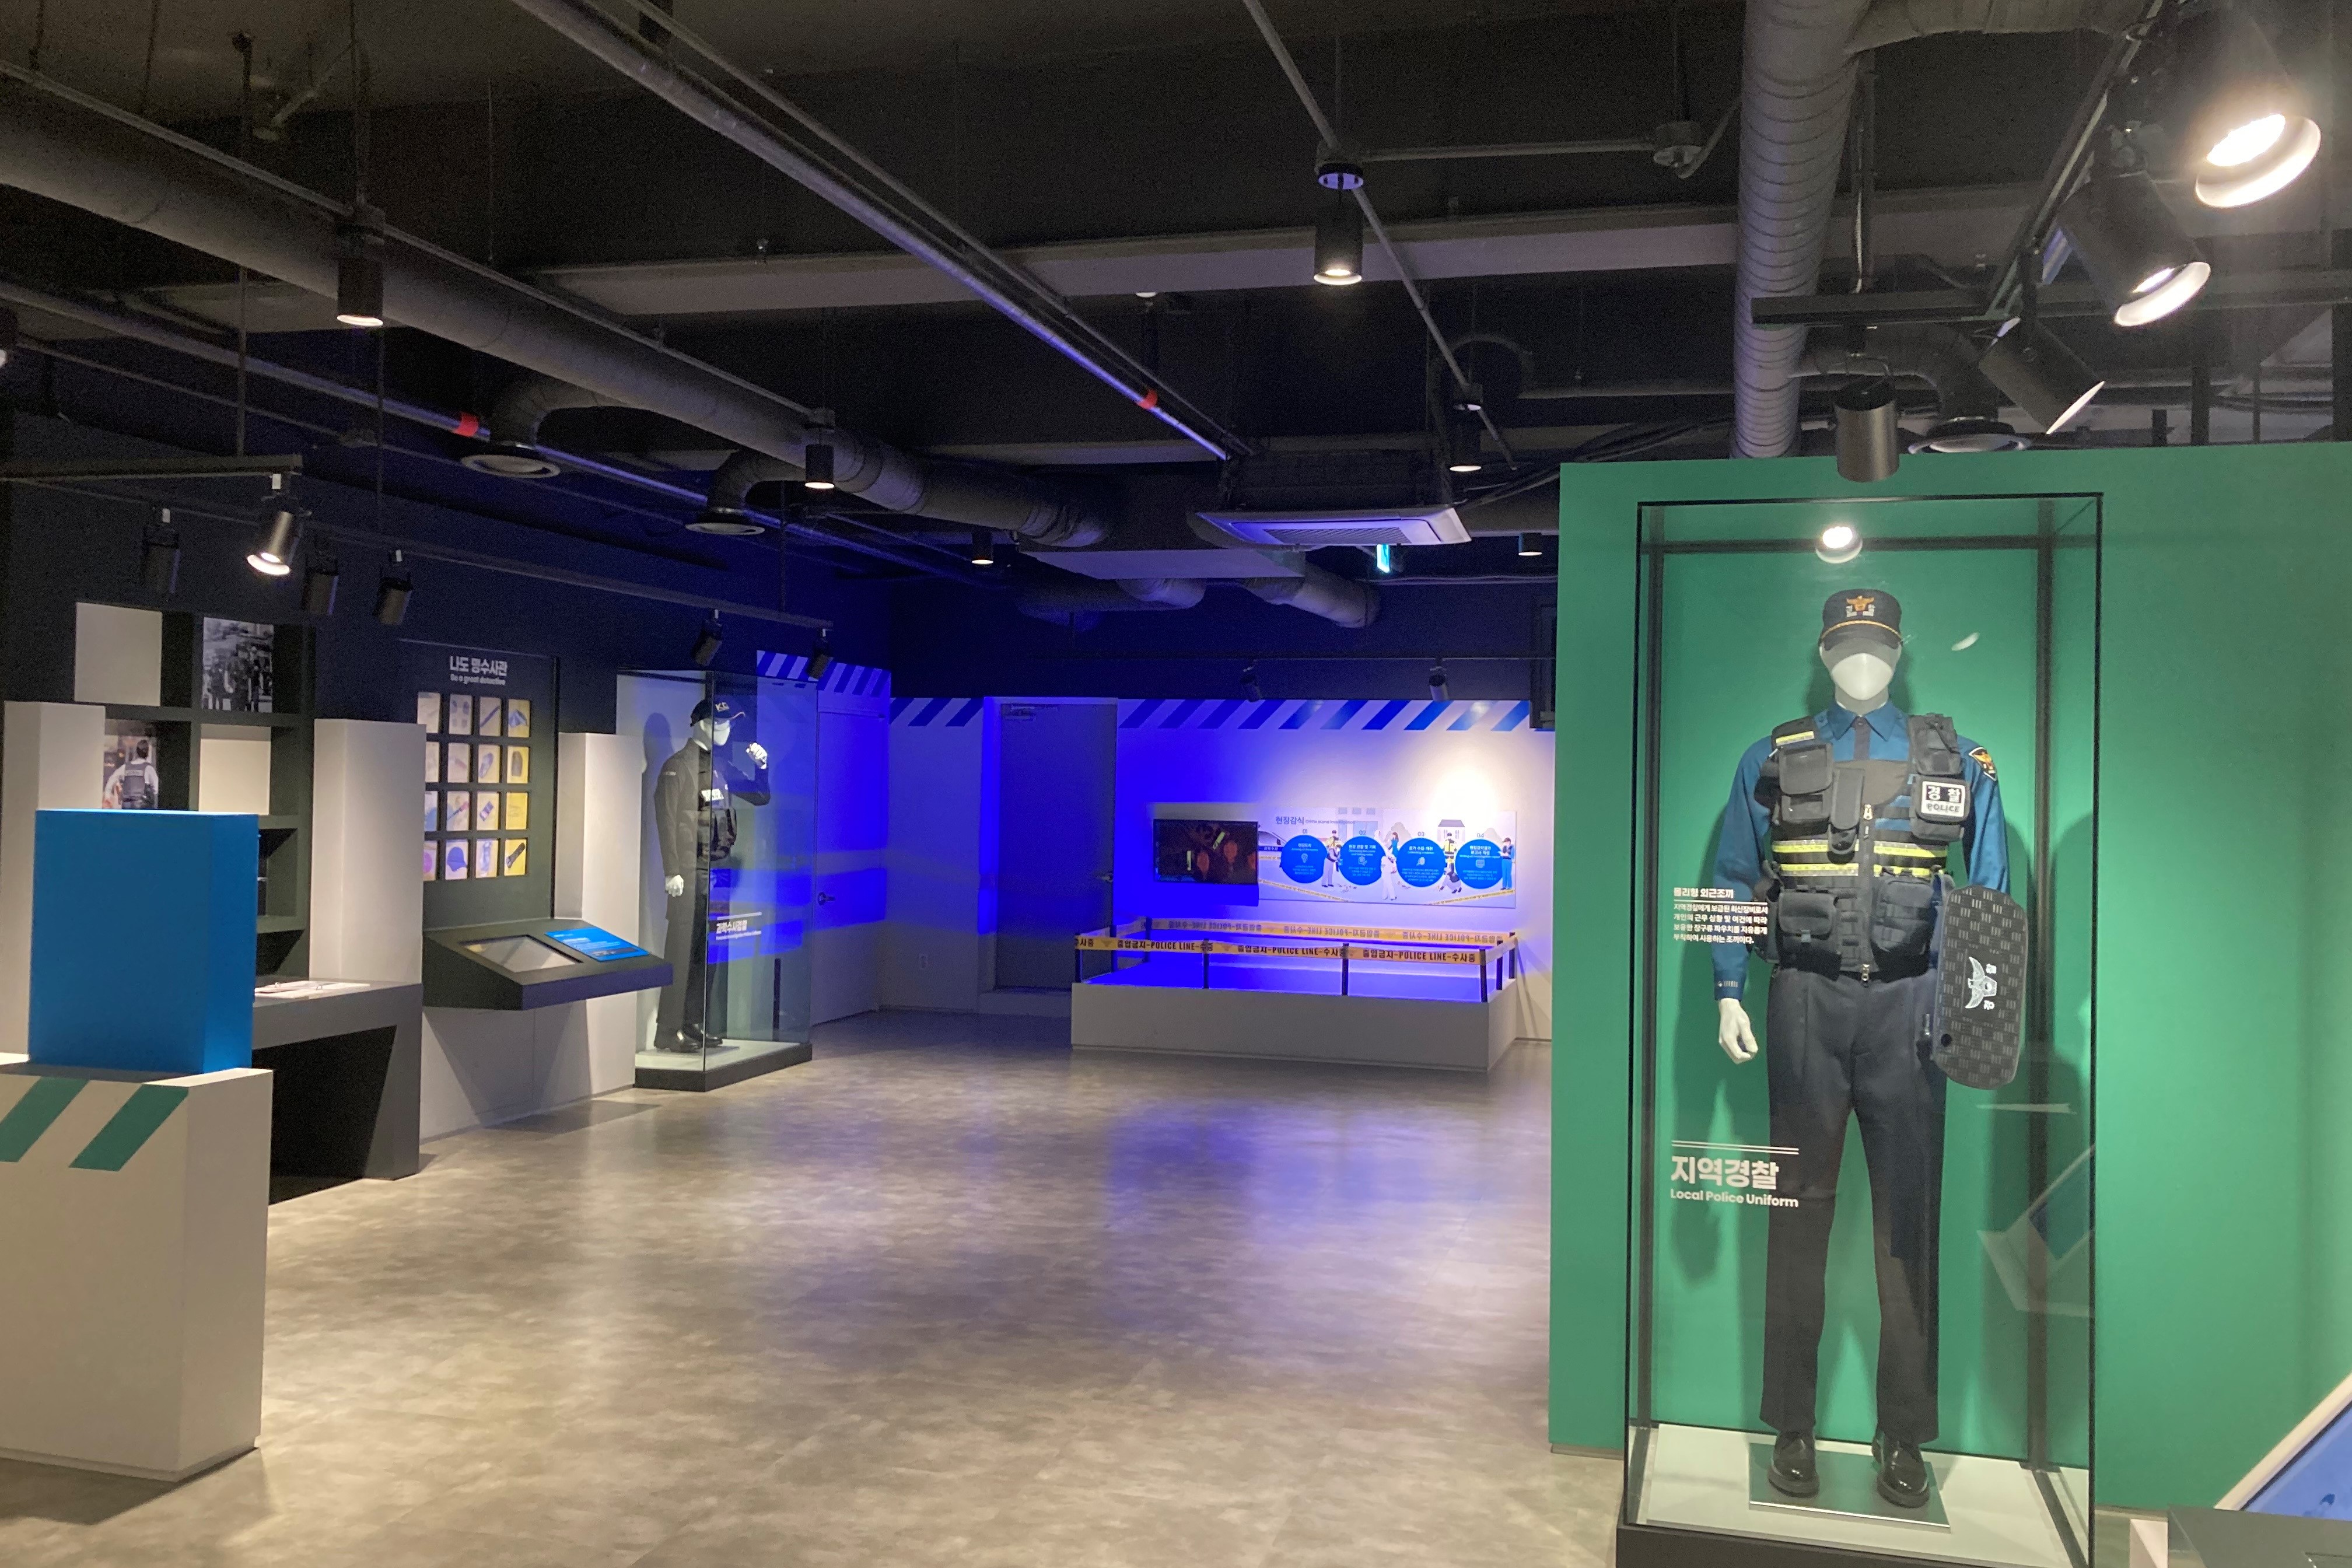 경찰박물관2 : 경찰박물관 내부 전경